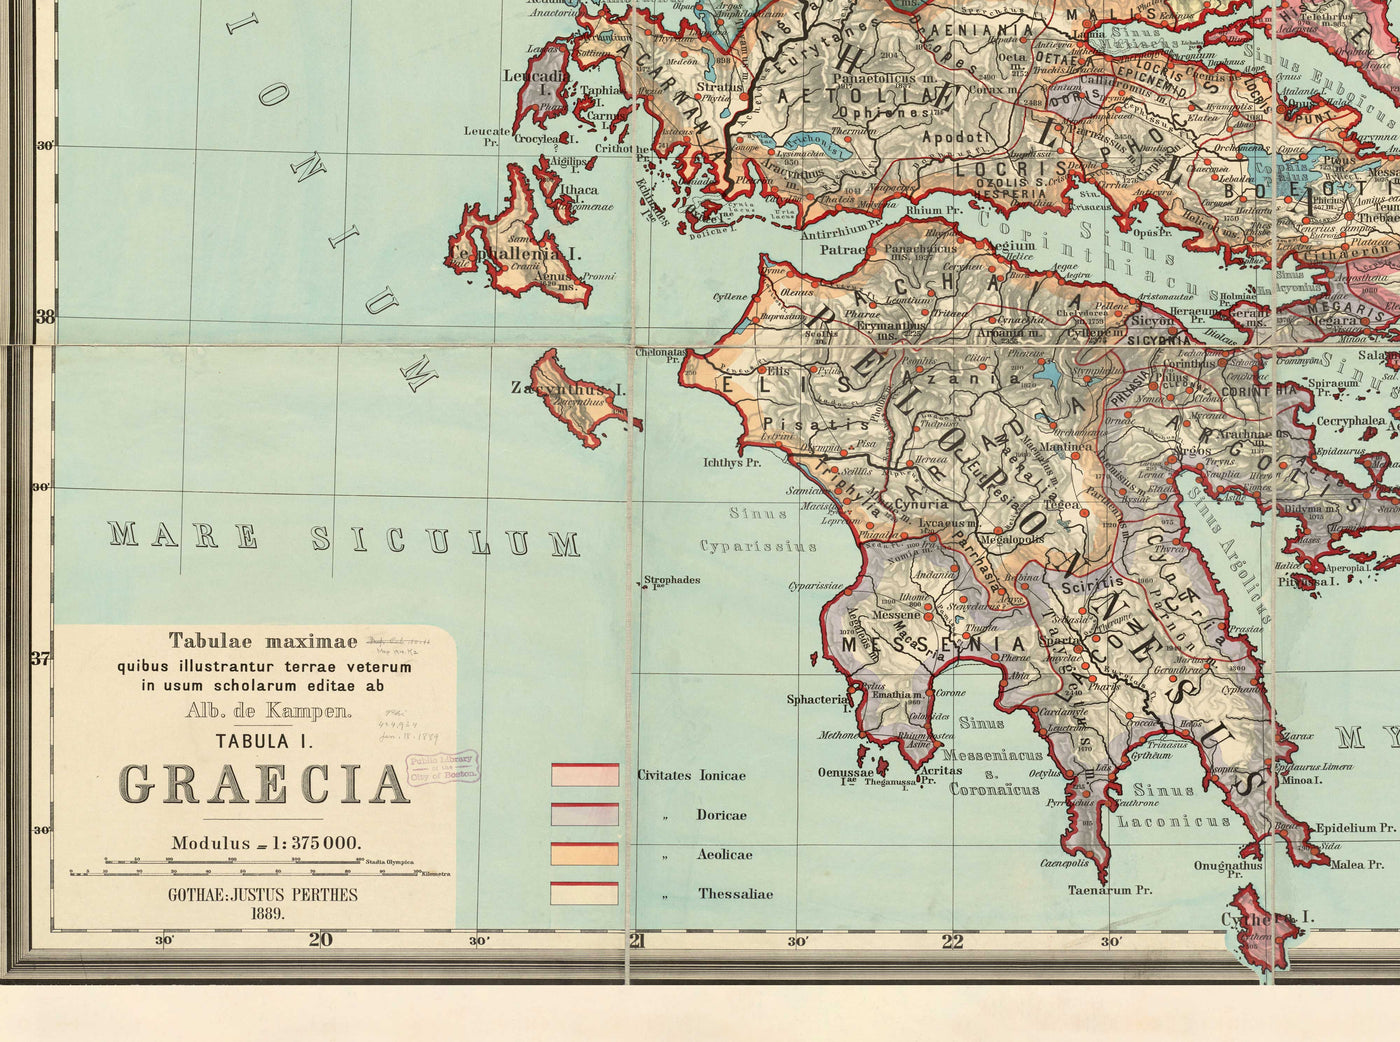 Old Map of Ancient Greece by Van Kampen in 1889 - Athens, Corfu, Zakynthos, Megara, Sparti